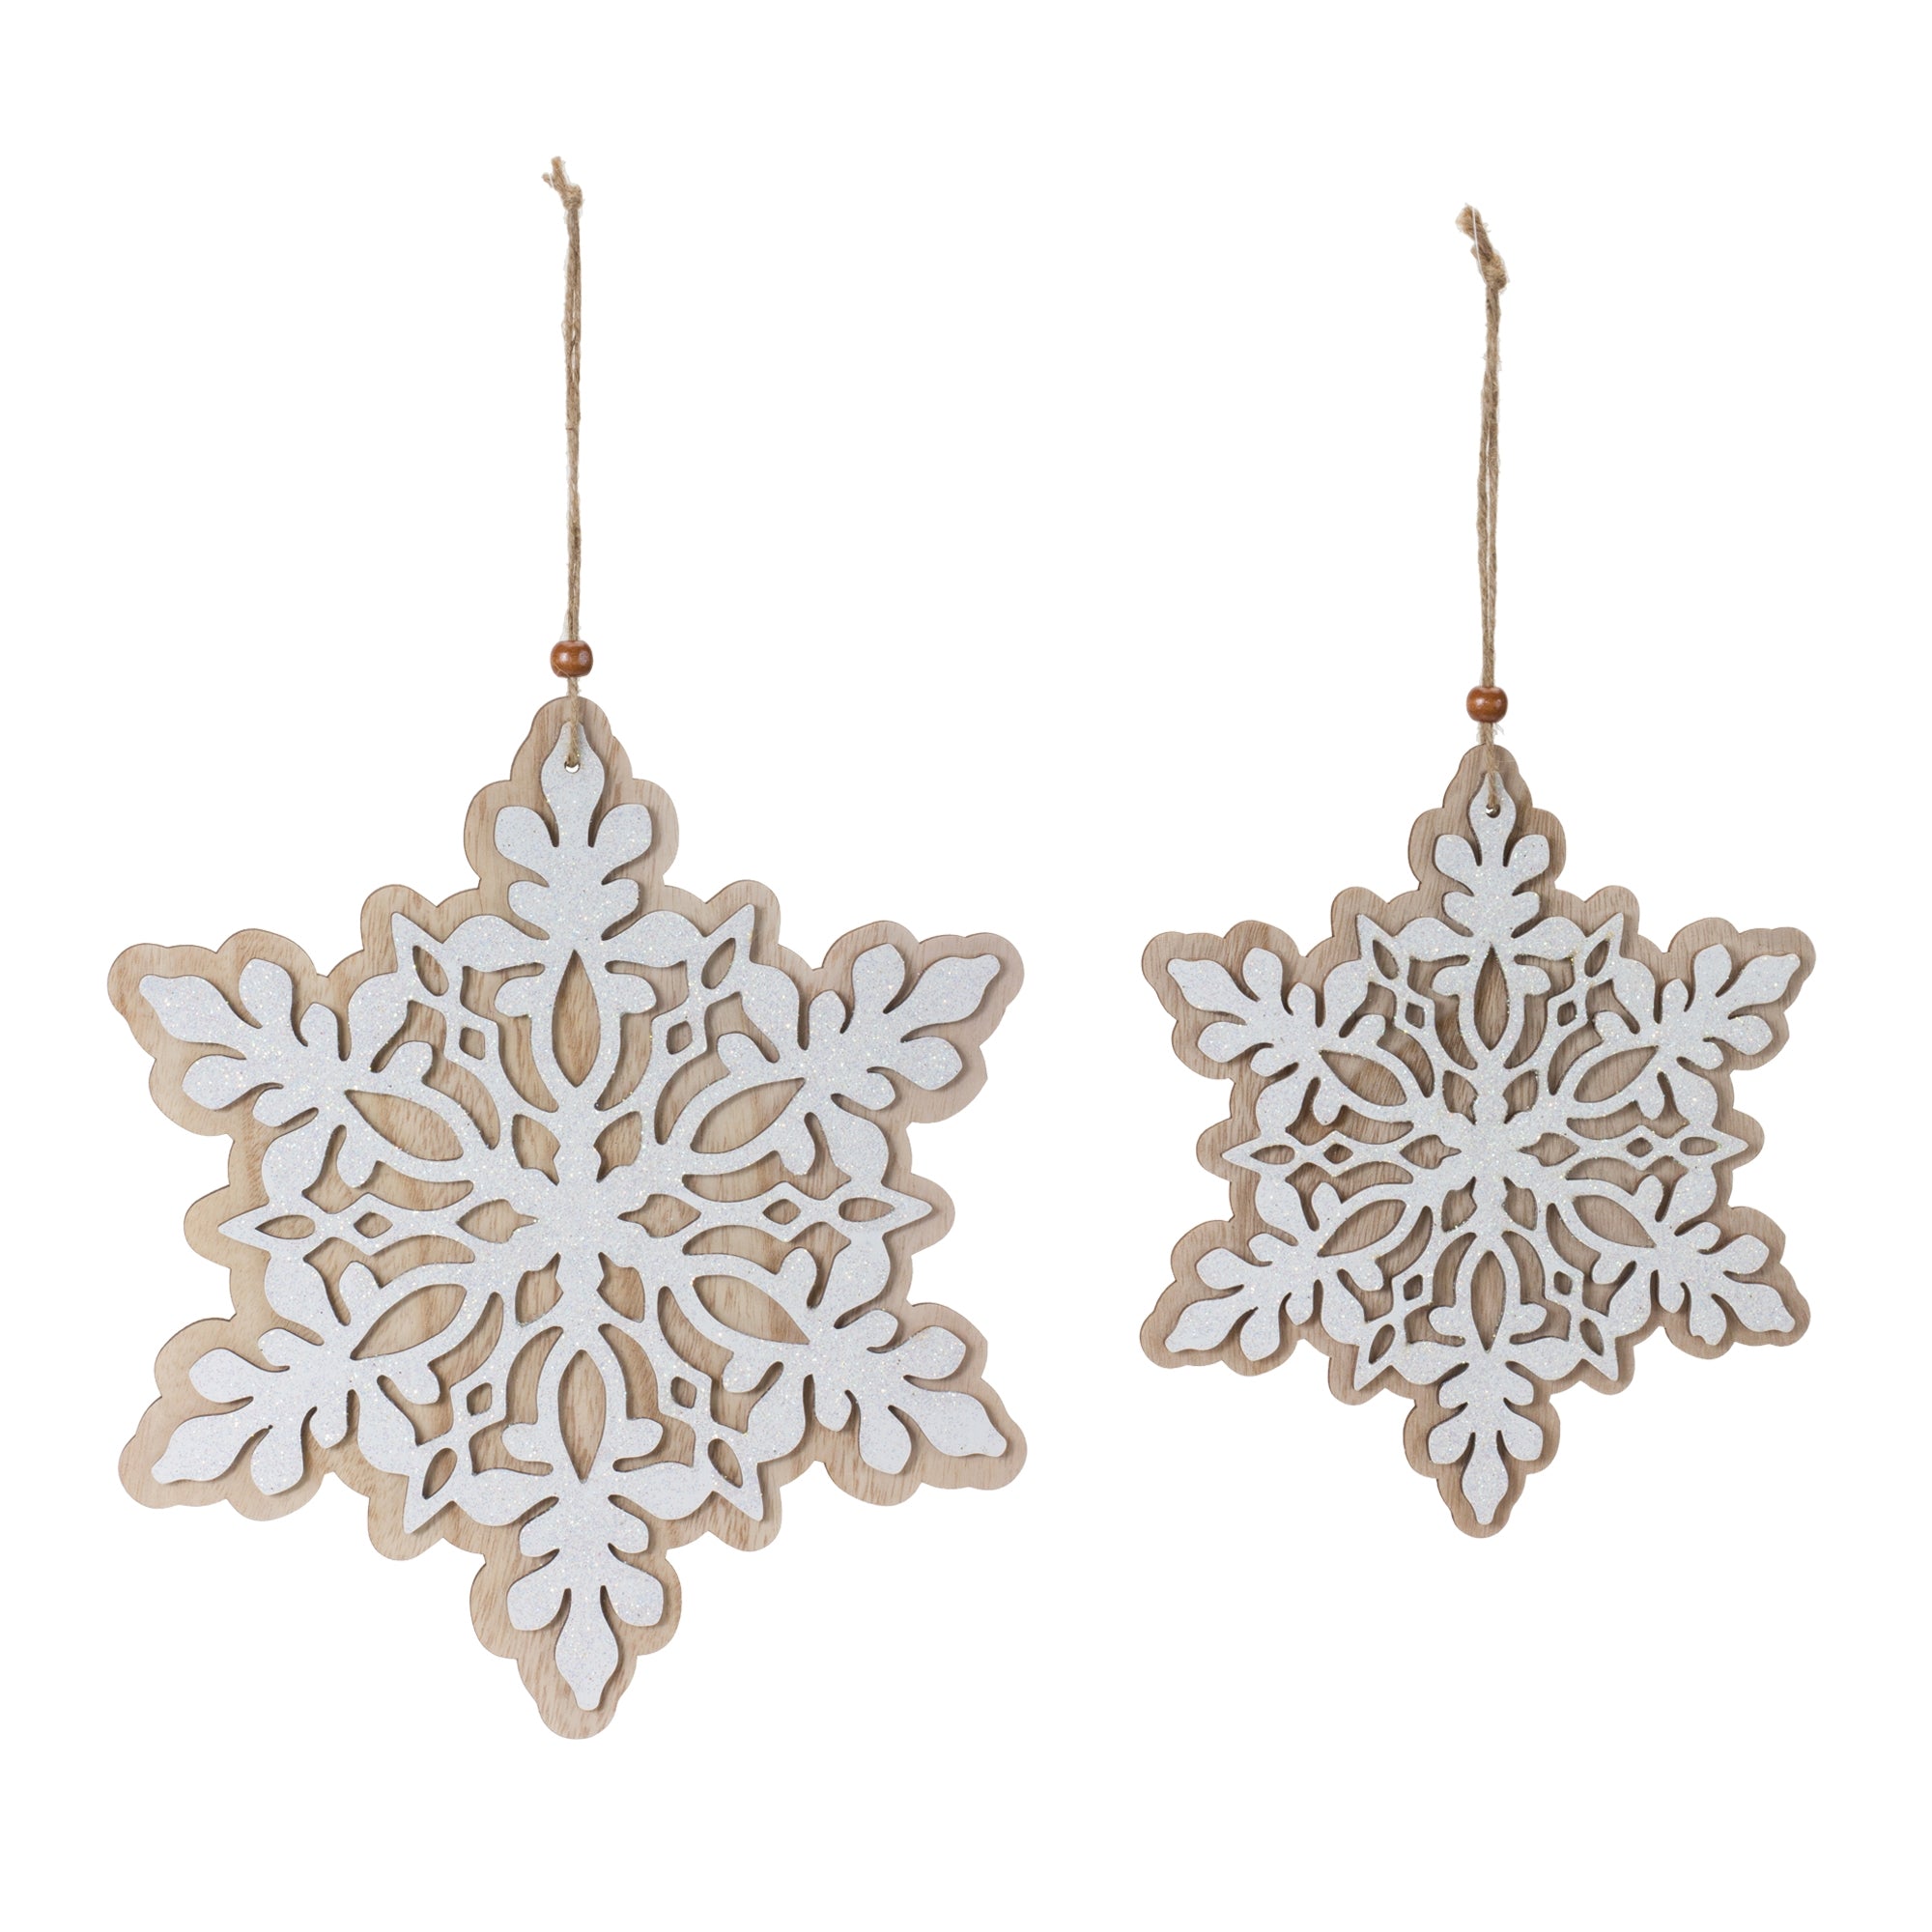 Wood Snowflake Ornaments (Set of 24)